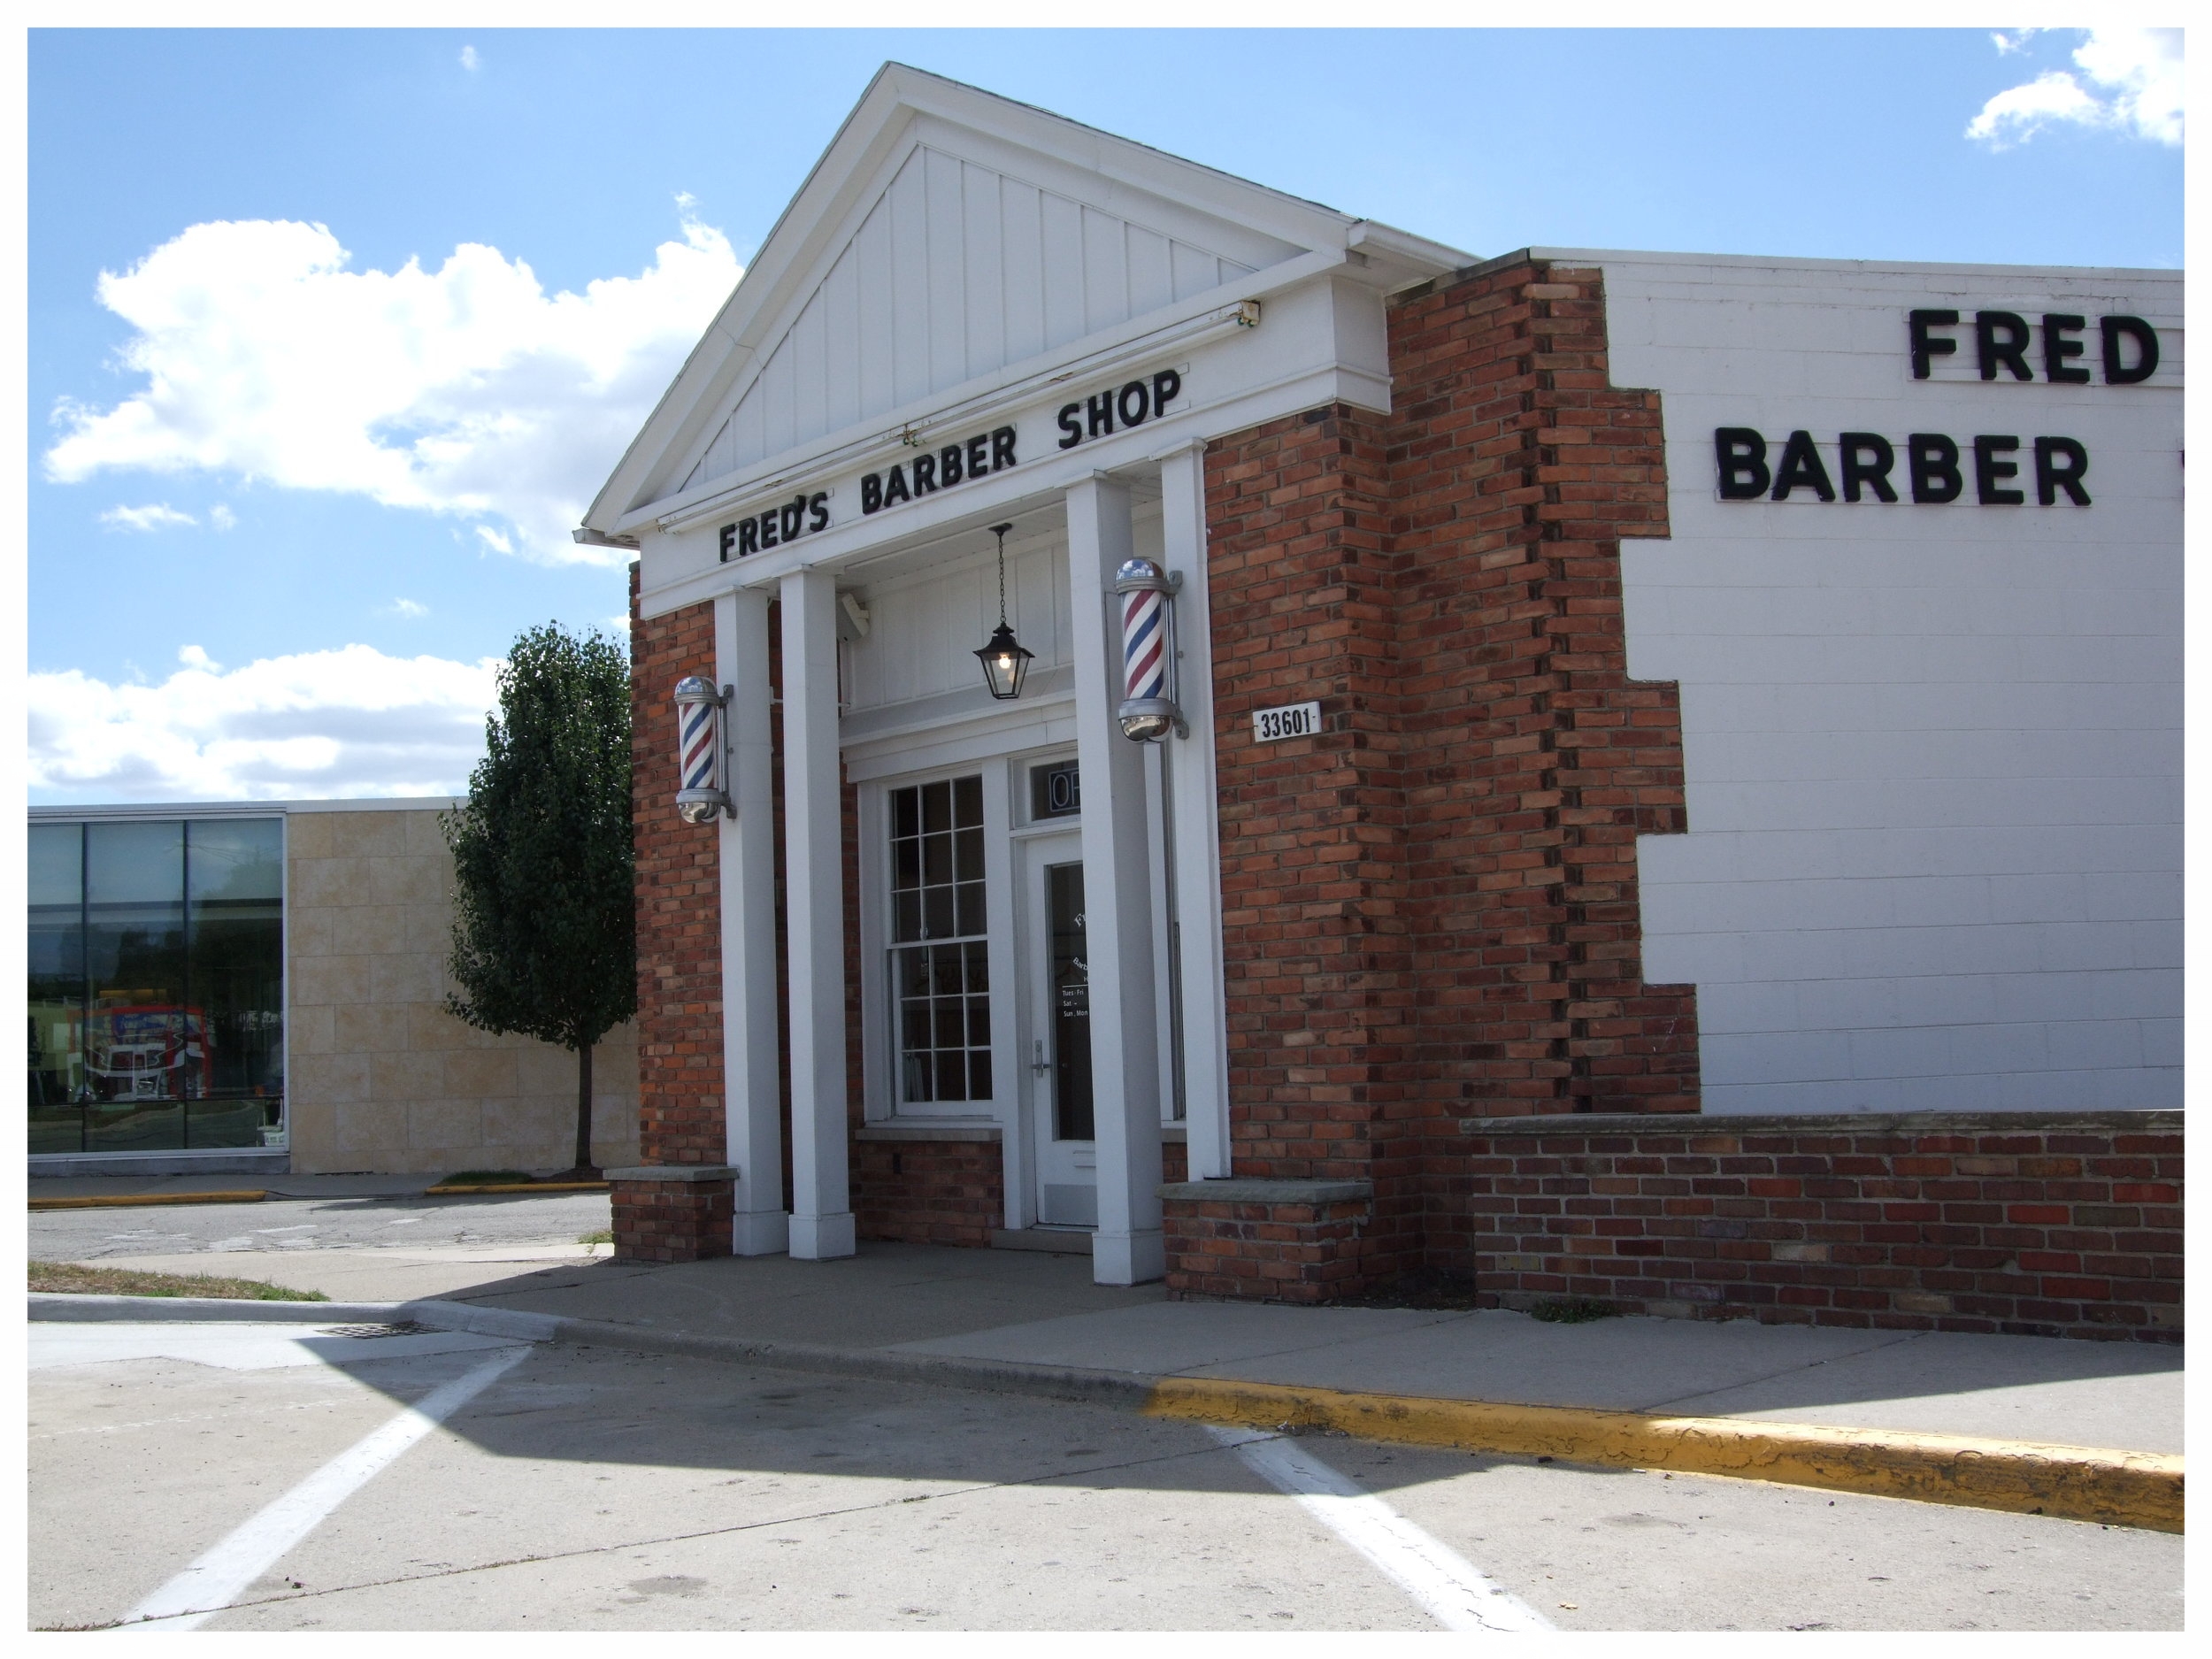 Birmingham Barbershop - Detroit Barber Co.